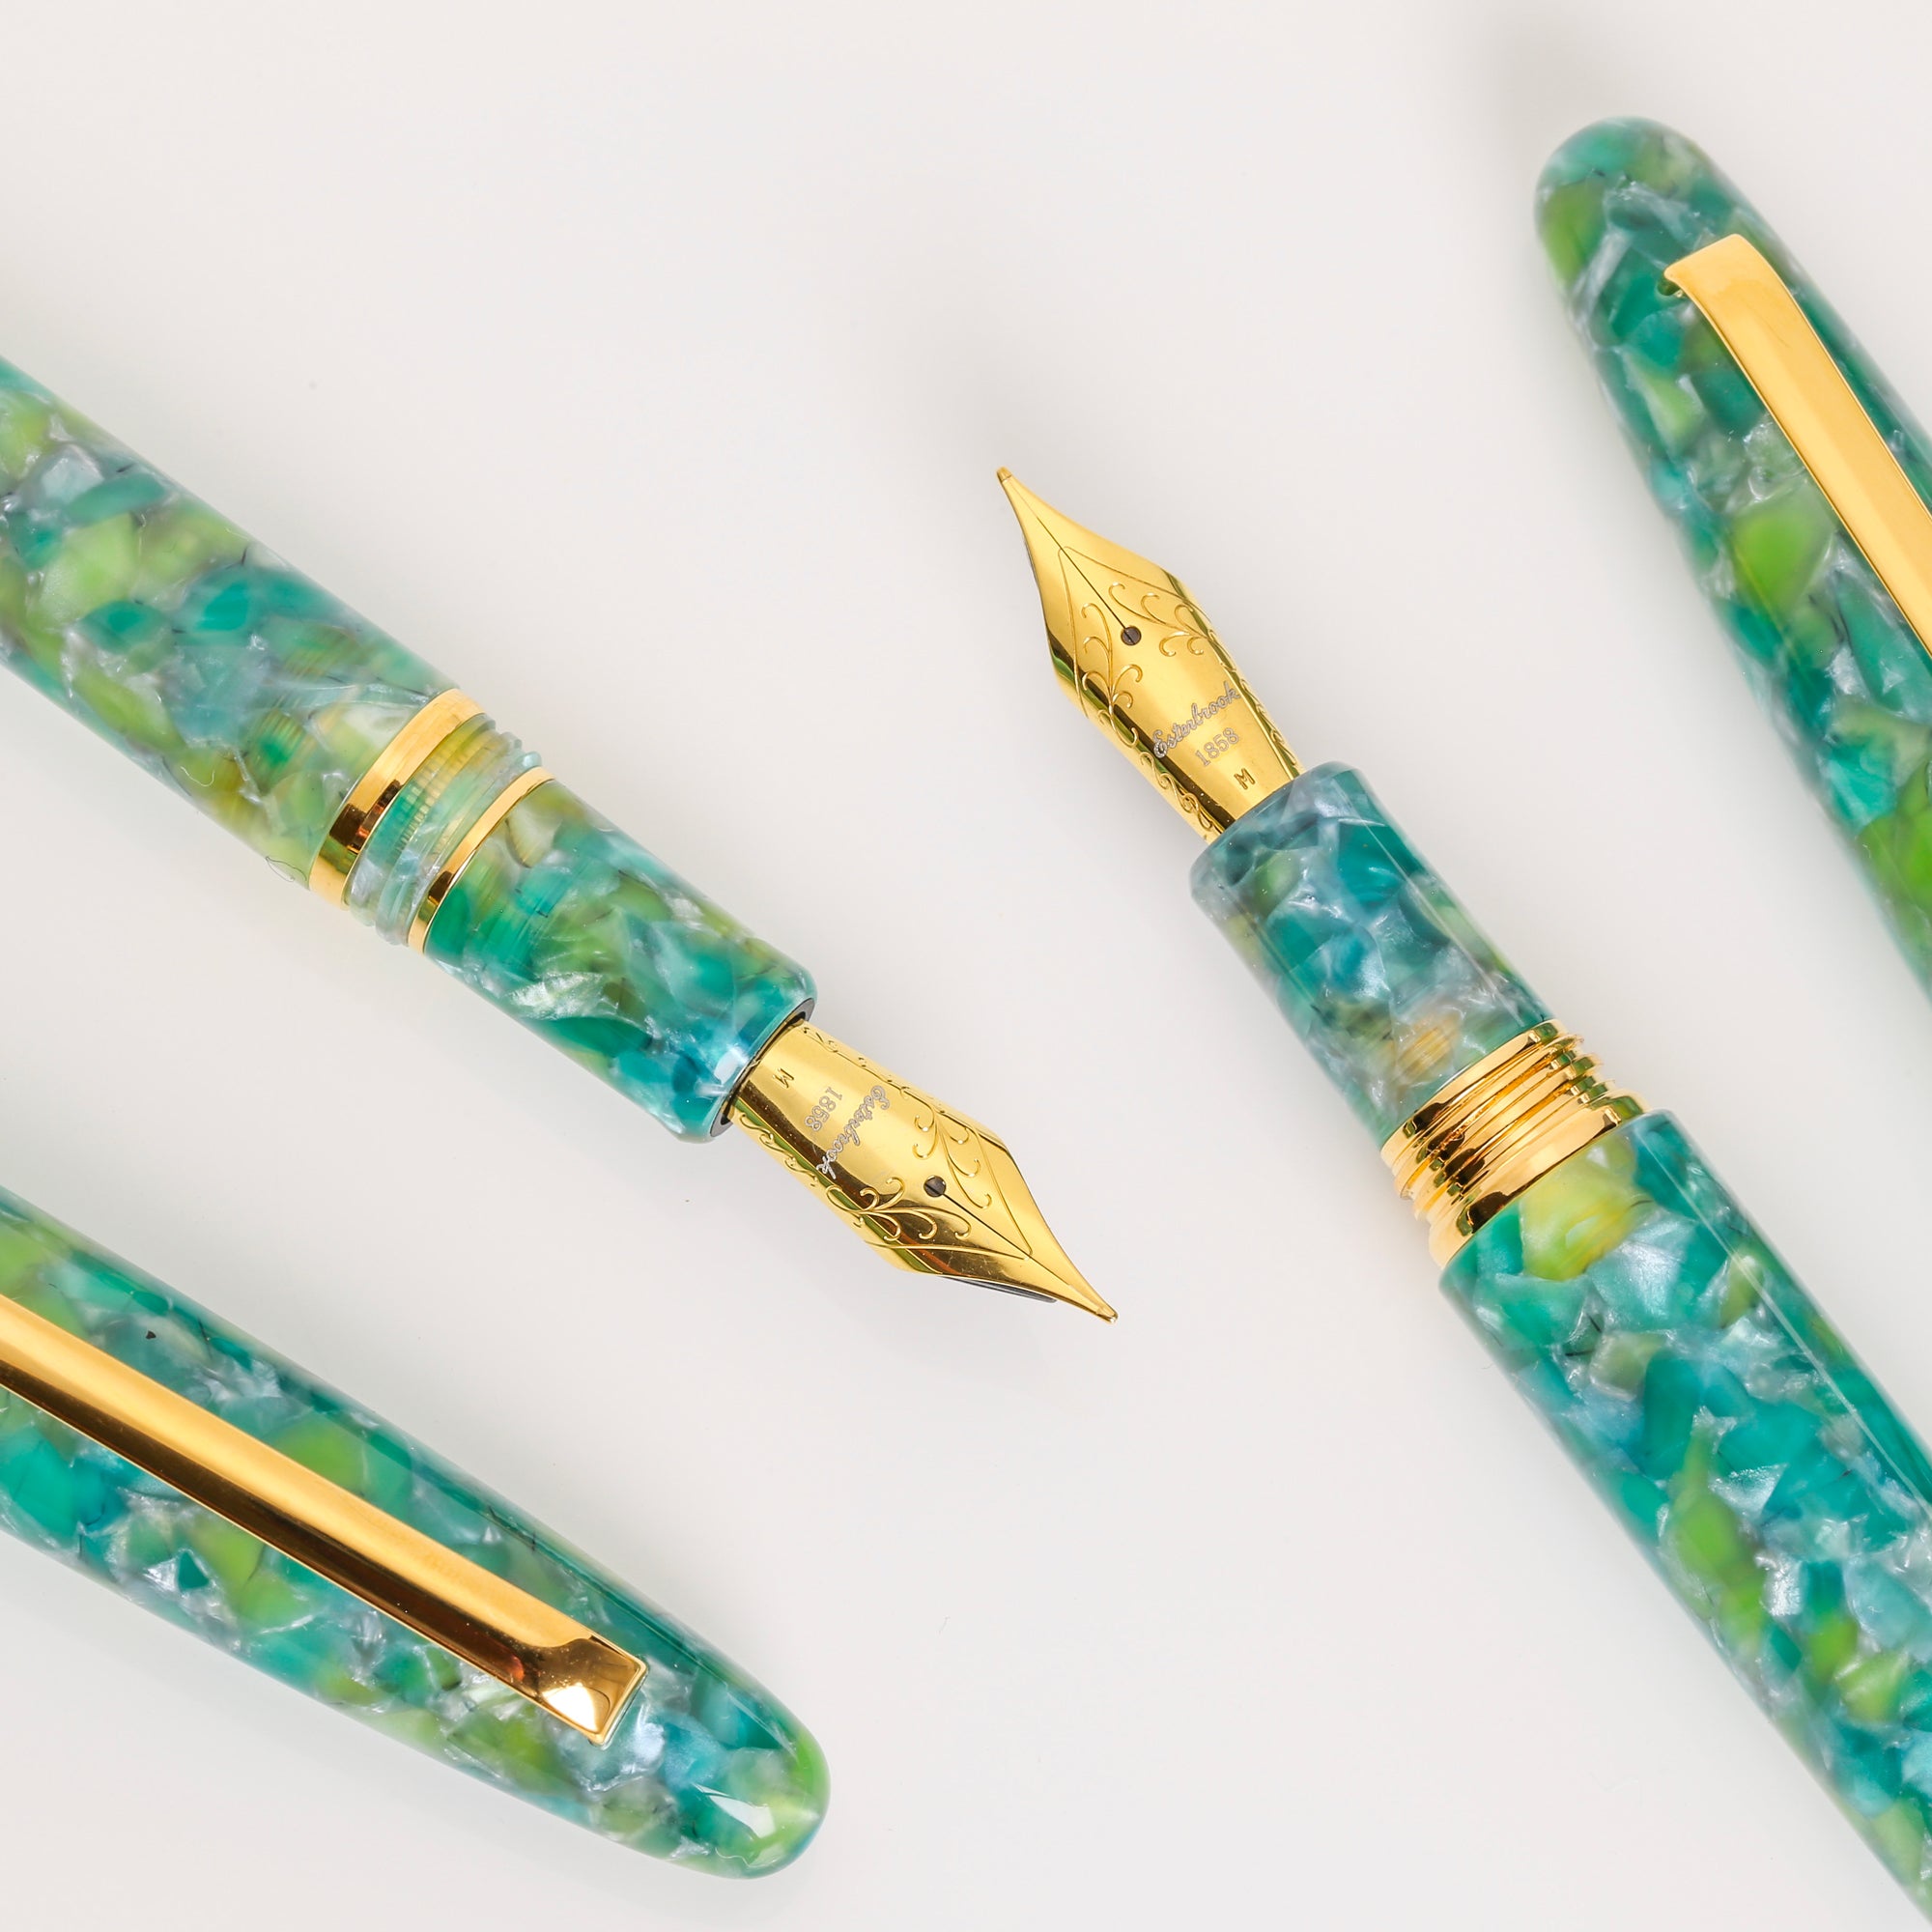 Sea Glass Collection Regular Size FP Gold Trim - Custom Needle Point Nib